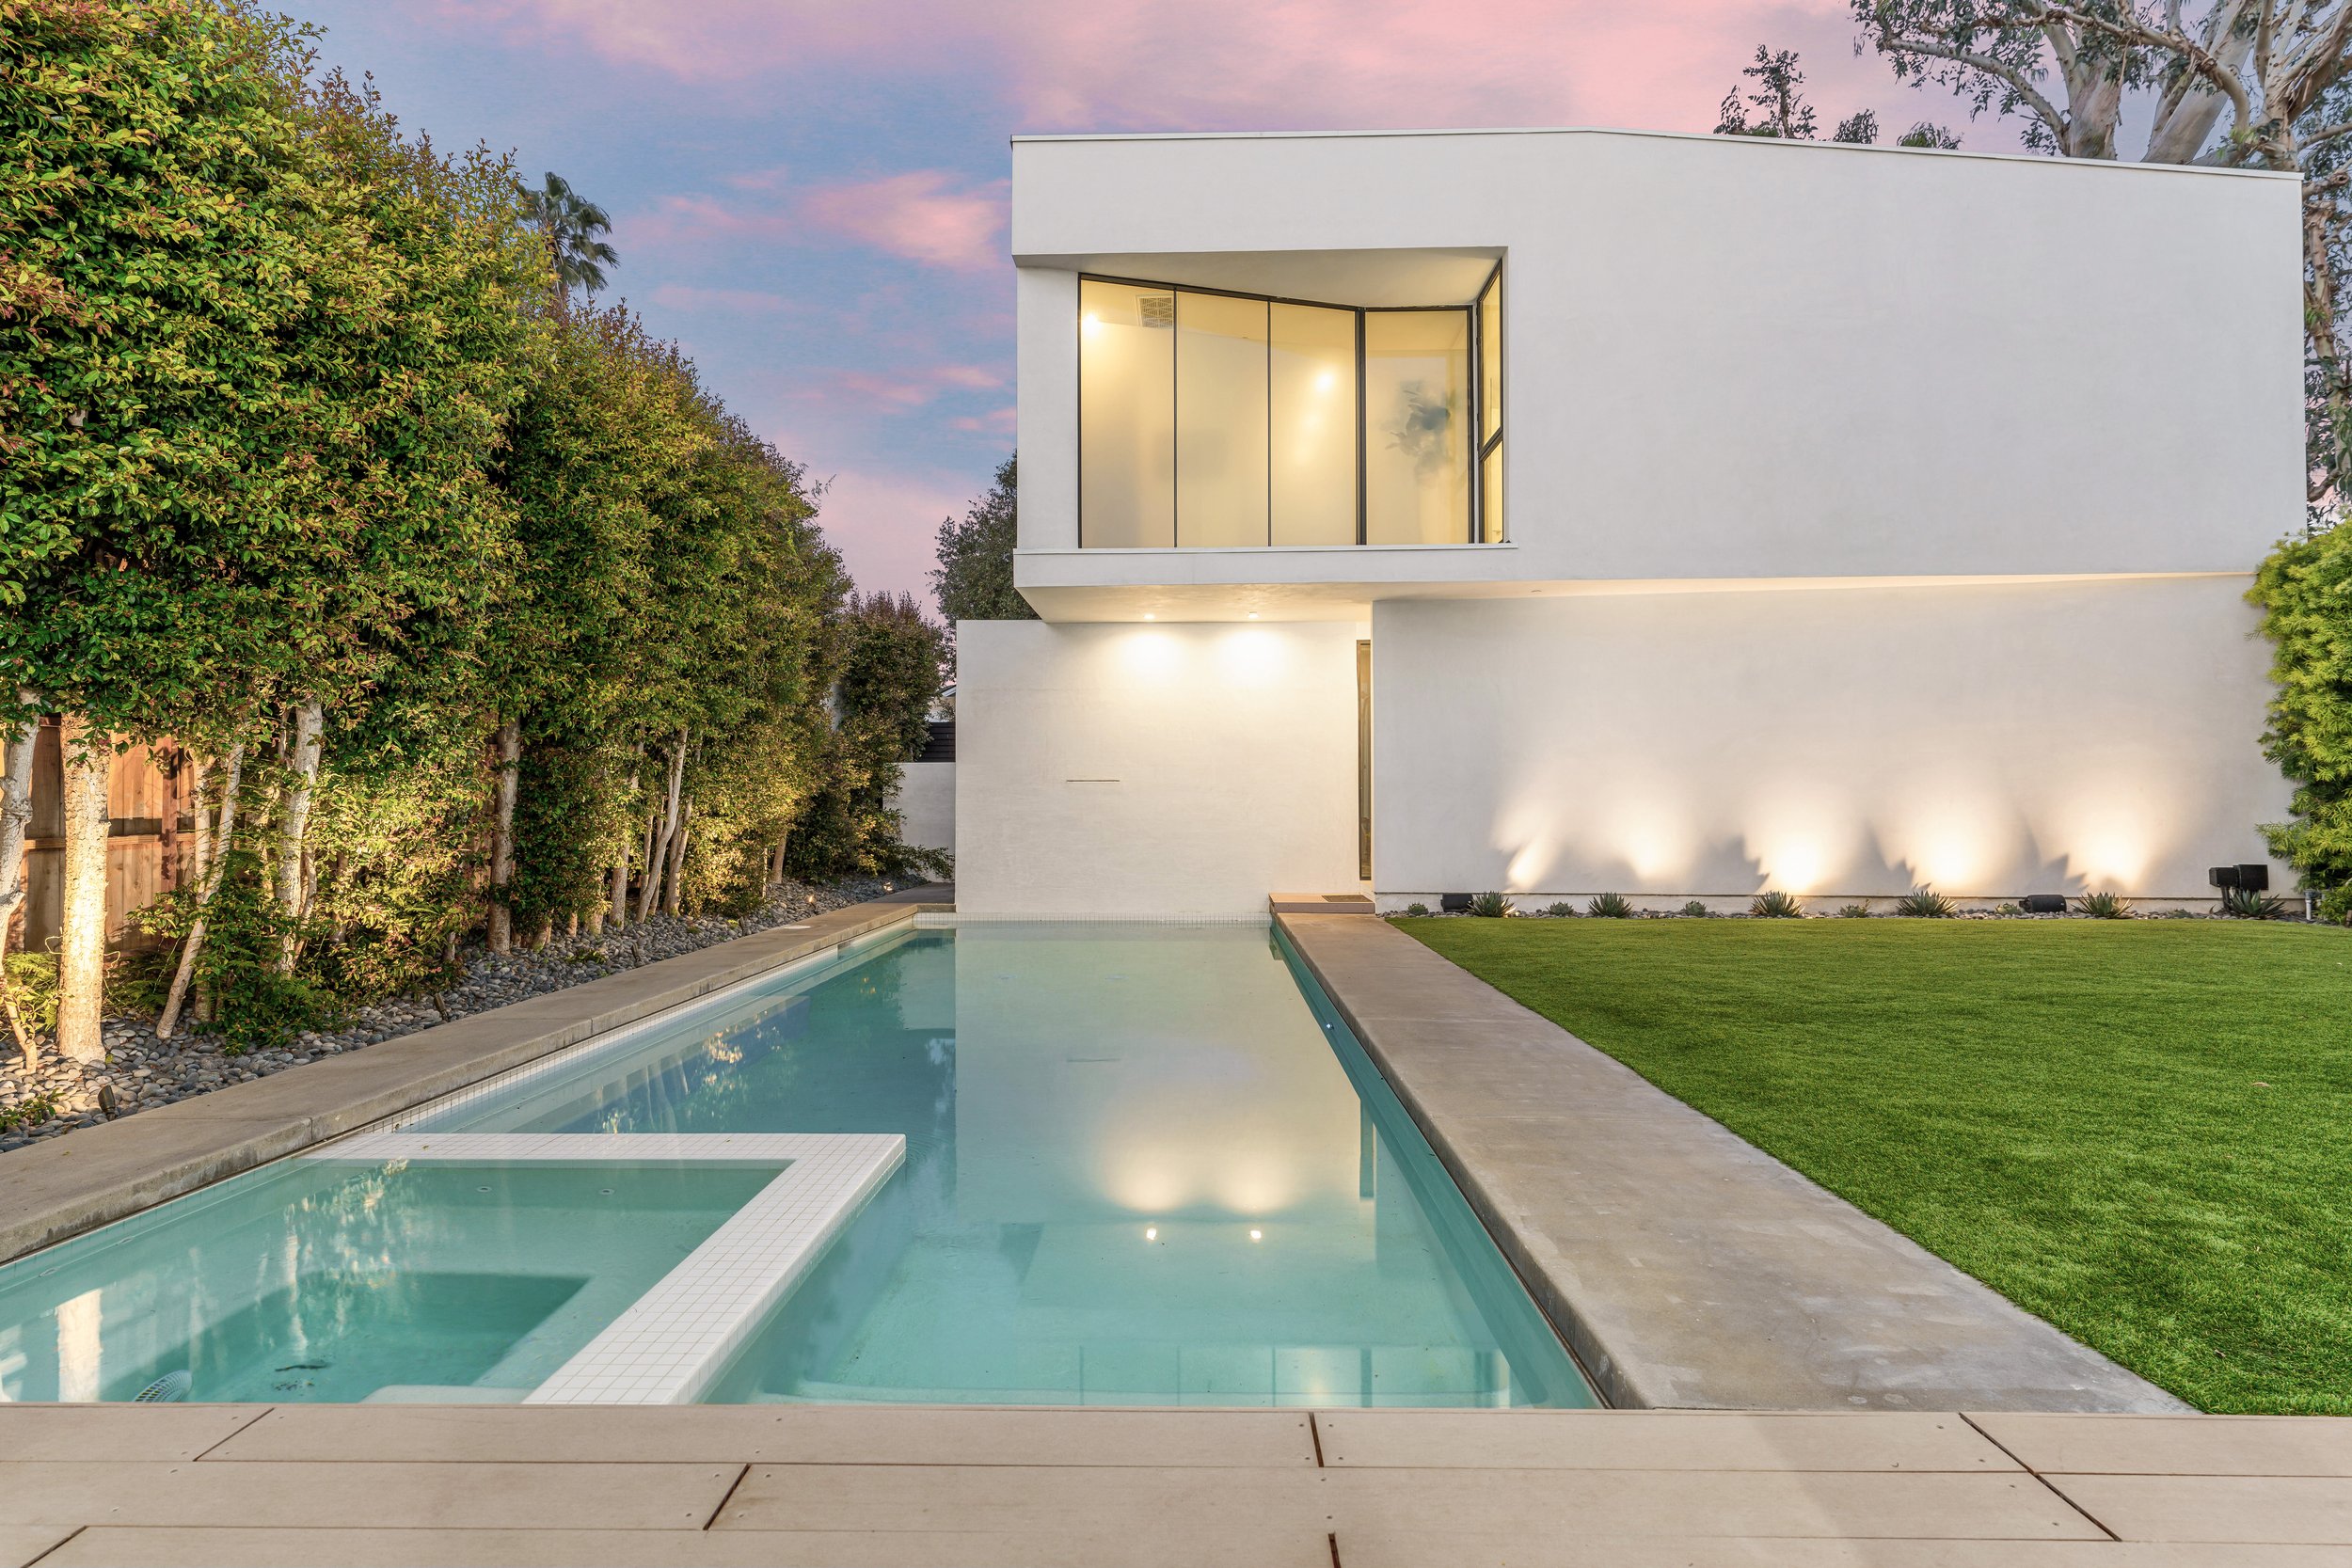 bspk-design-architecture-california-4100-residenital-cnb-house-backyard-pool-3.jpg